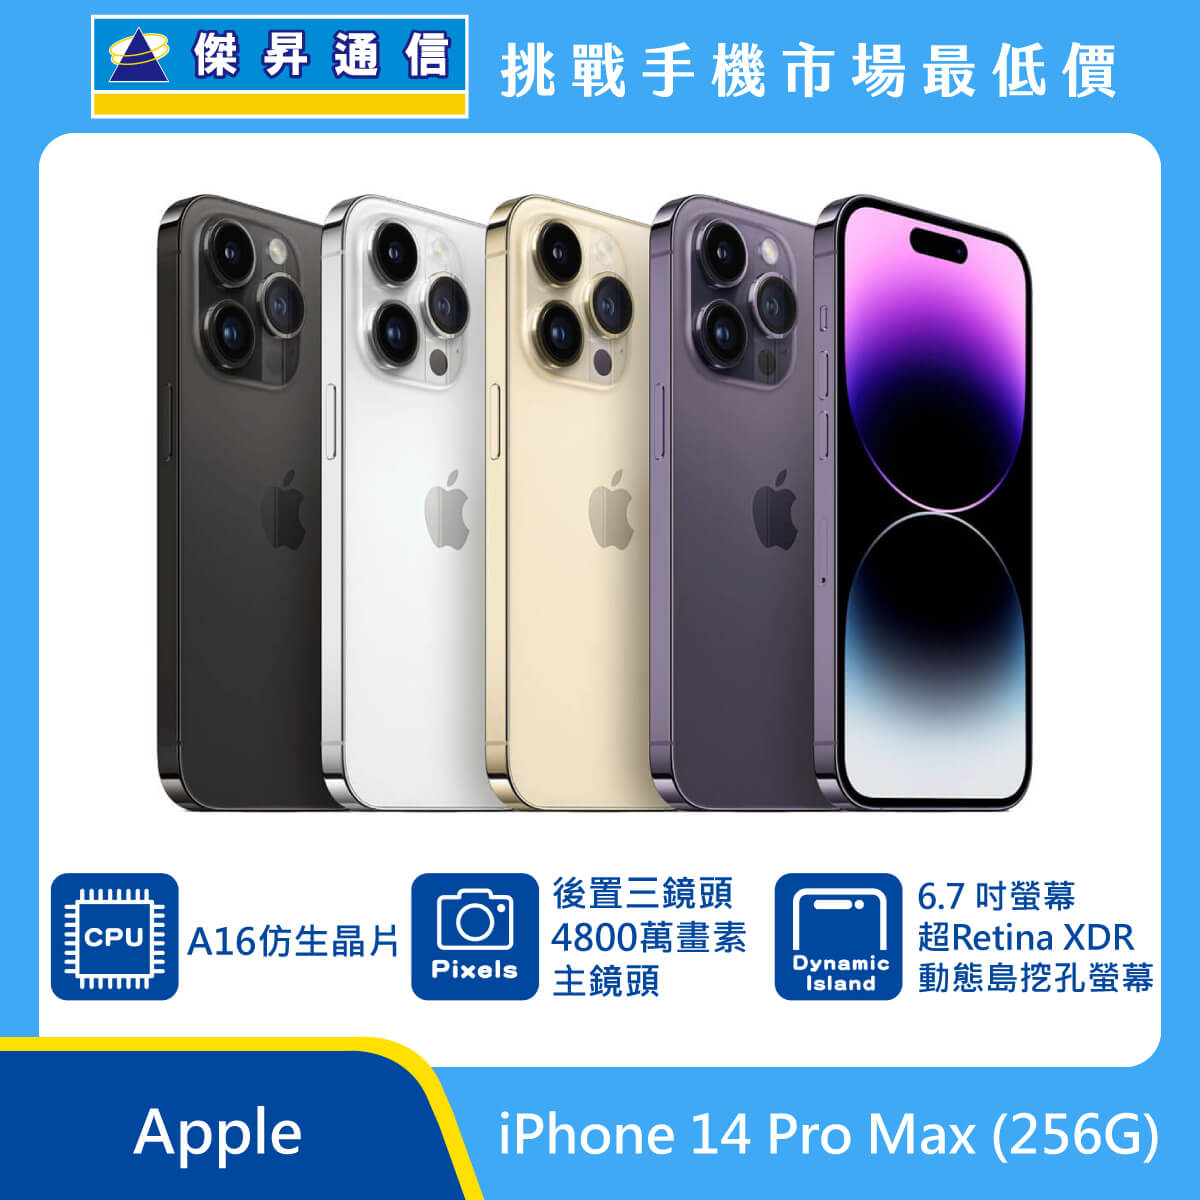 Apple iPhone 14 Pro Max (256G)